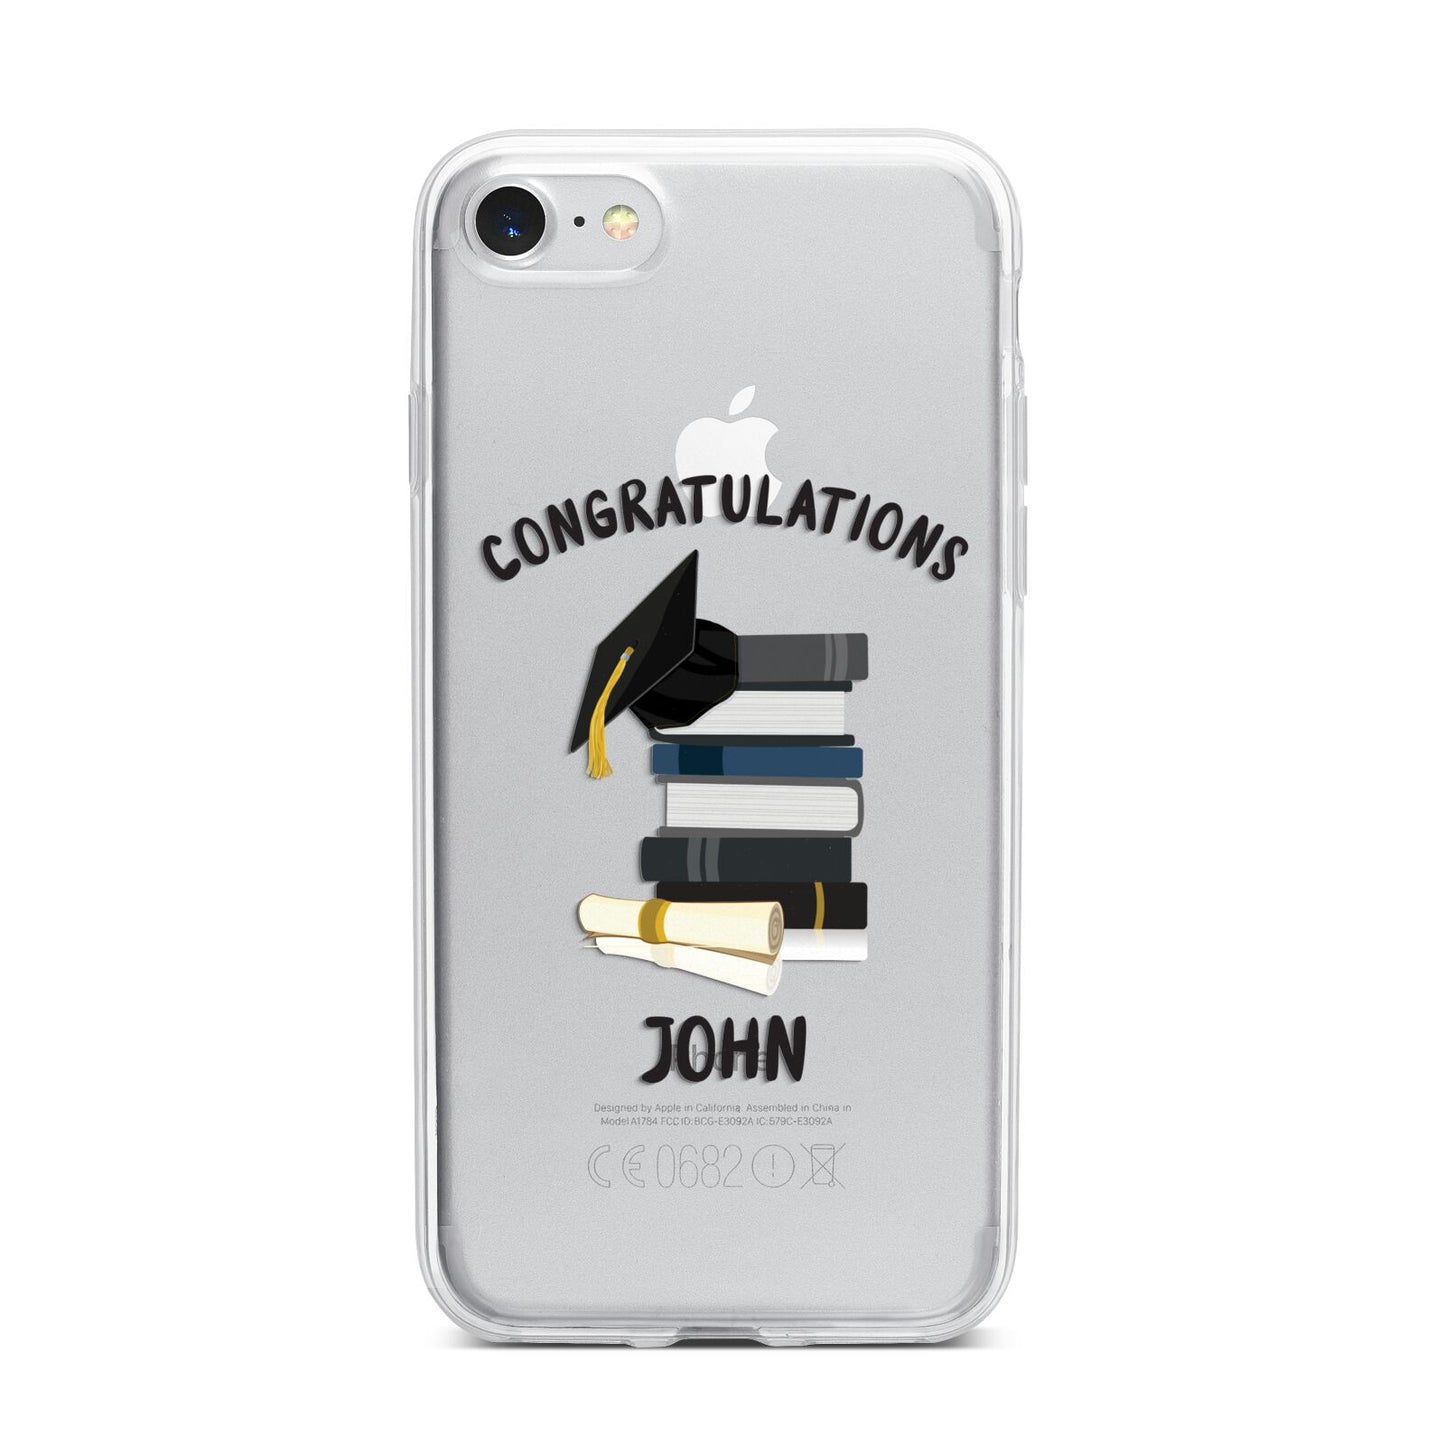 Congratulations Graduate iPhone 7 Bumper Case on Silver iPhone